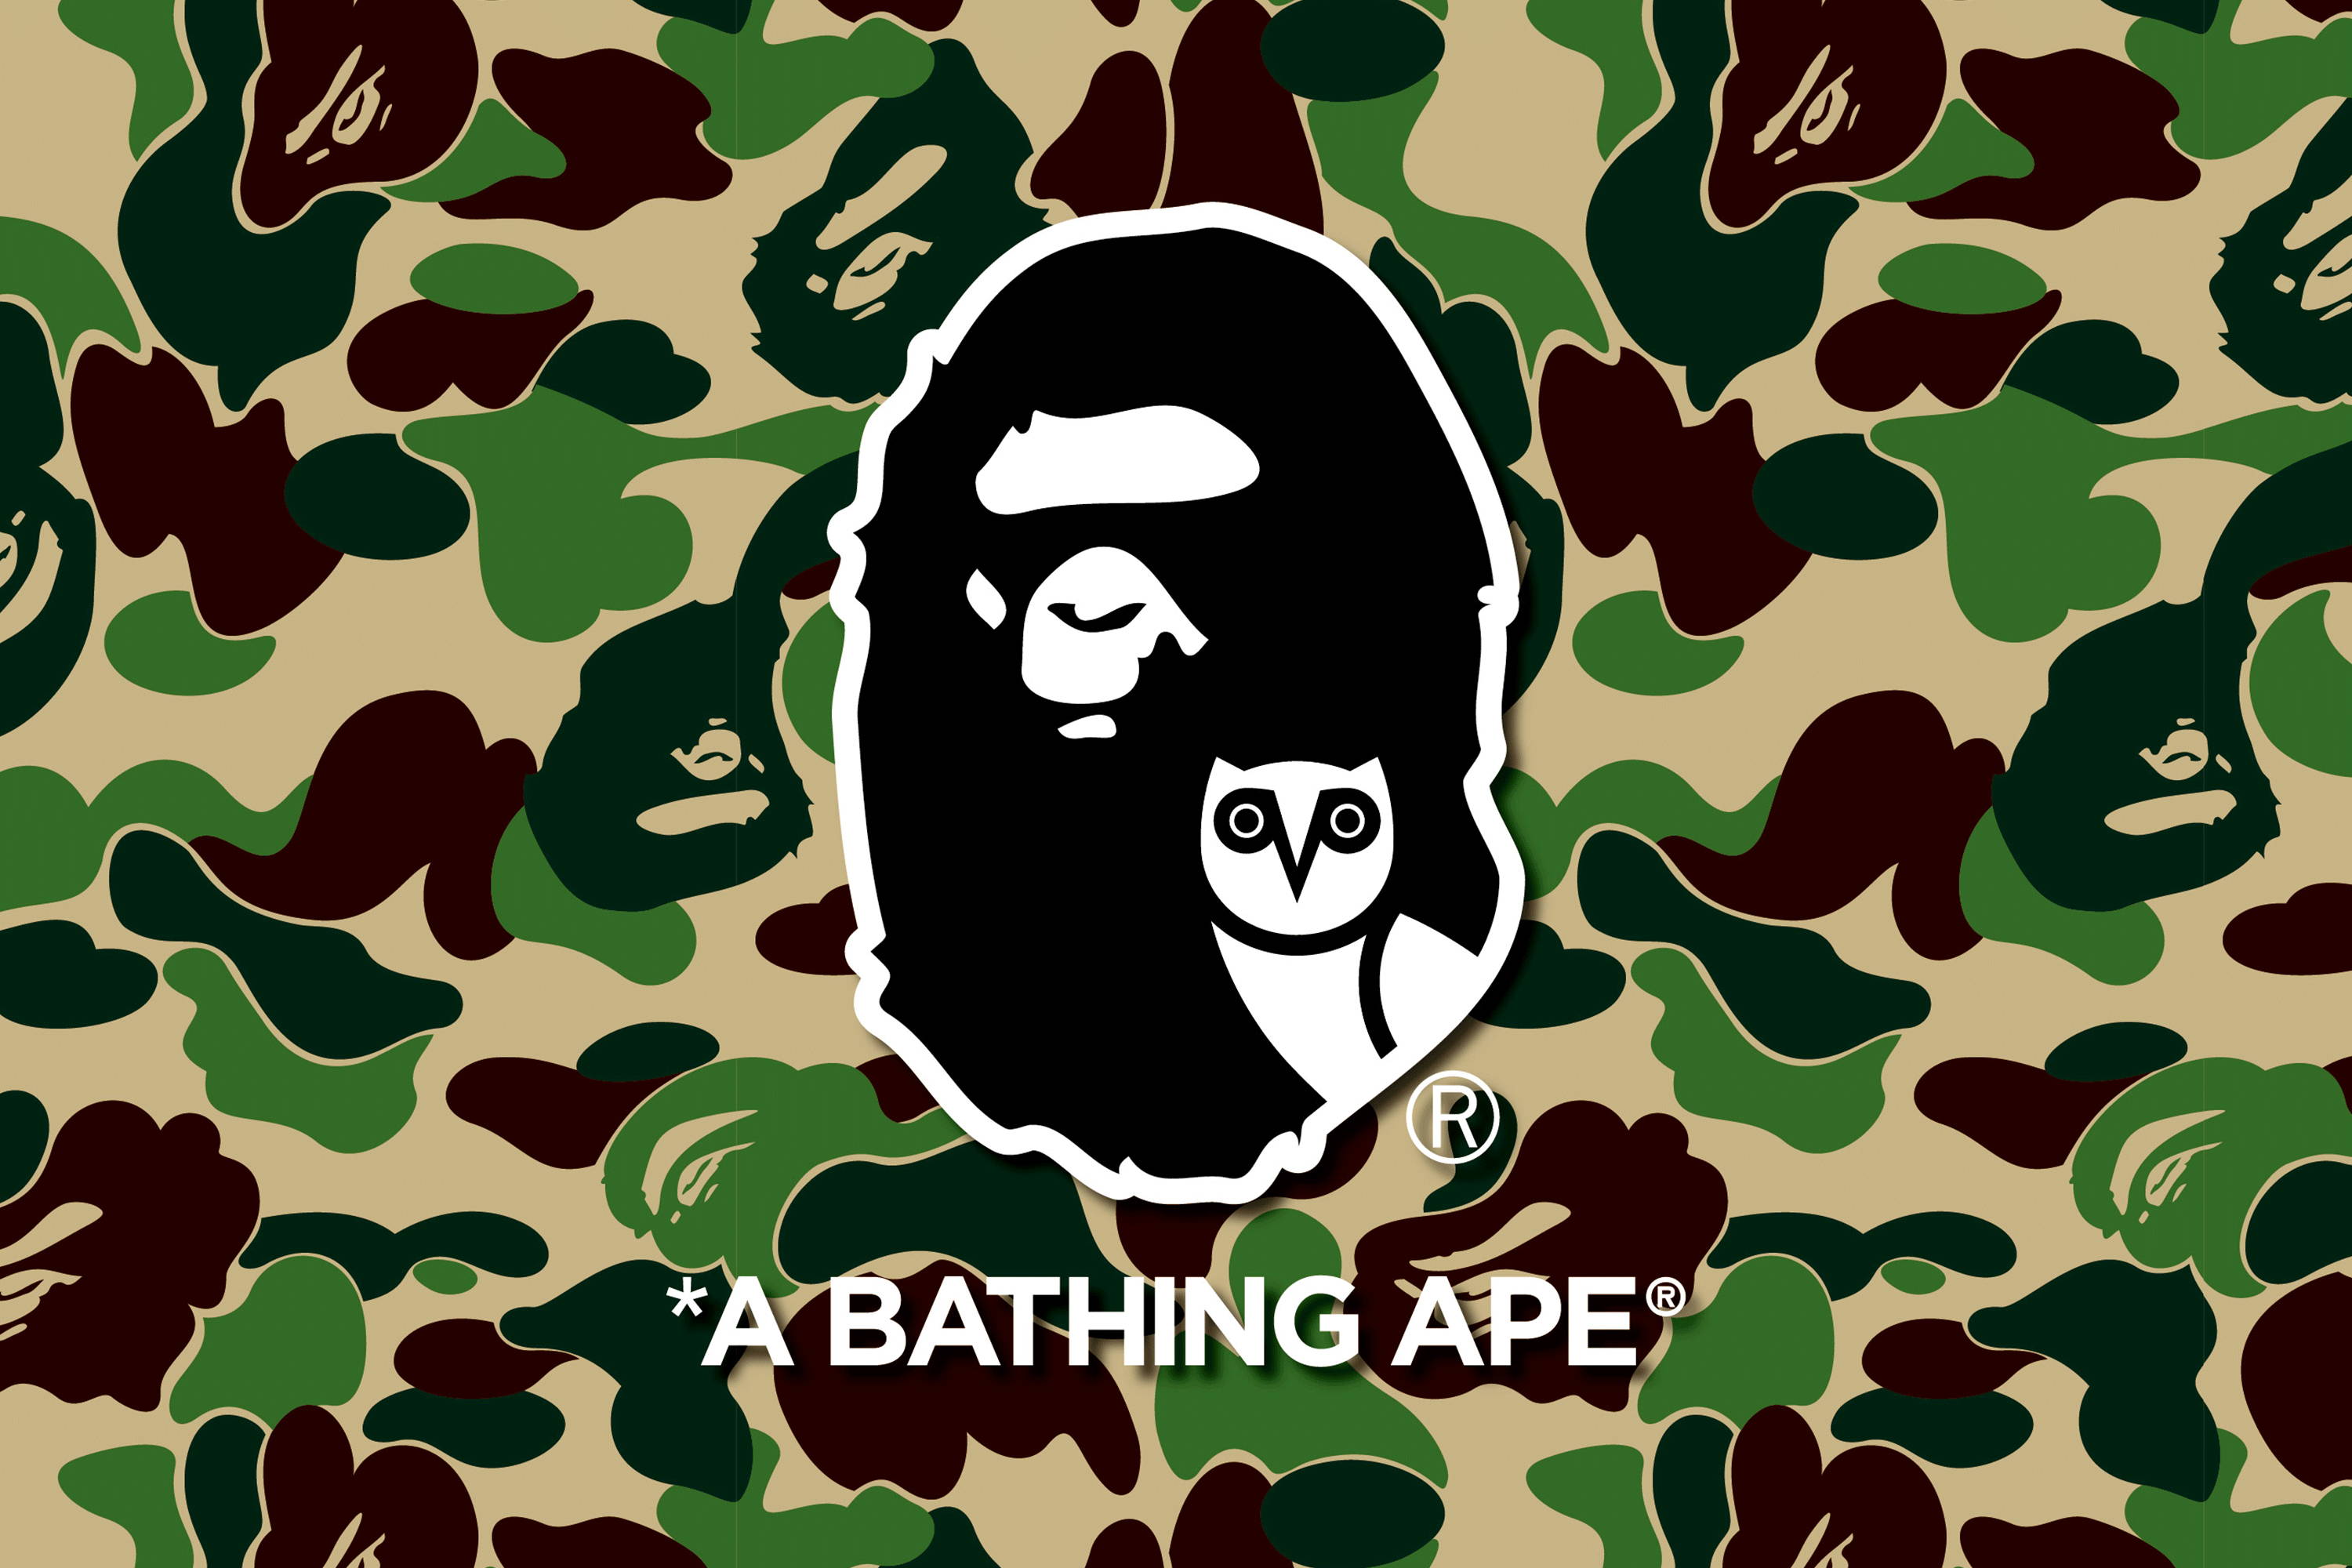 A BATHING APE® x October's Very Own | bape.com